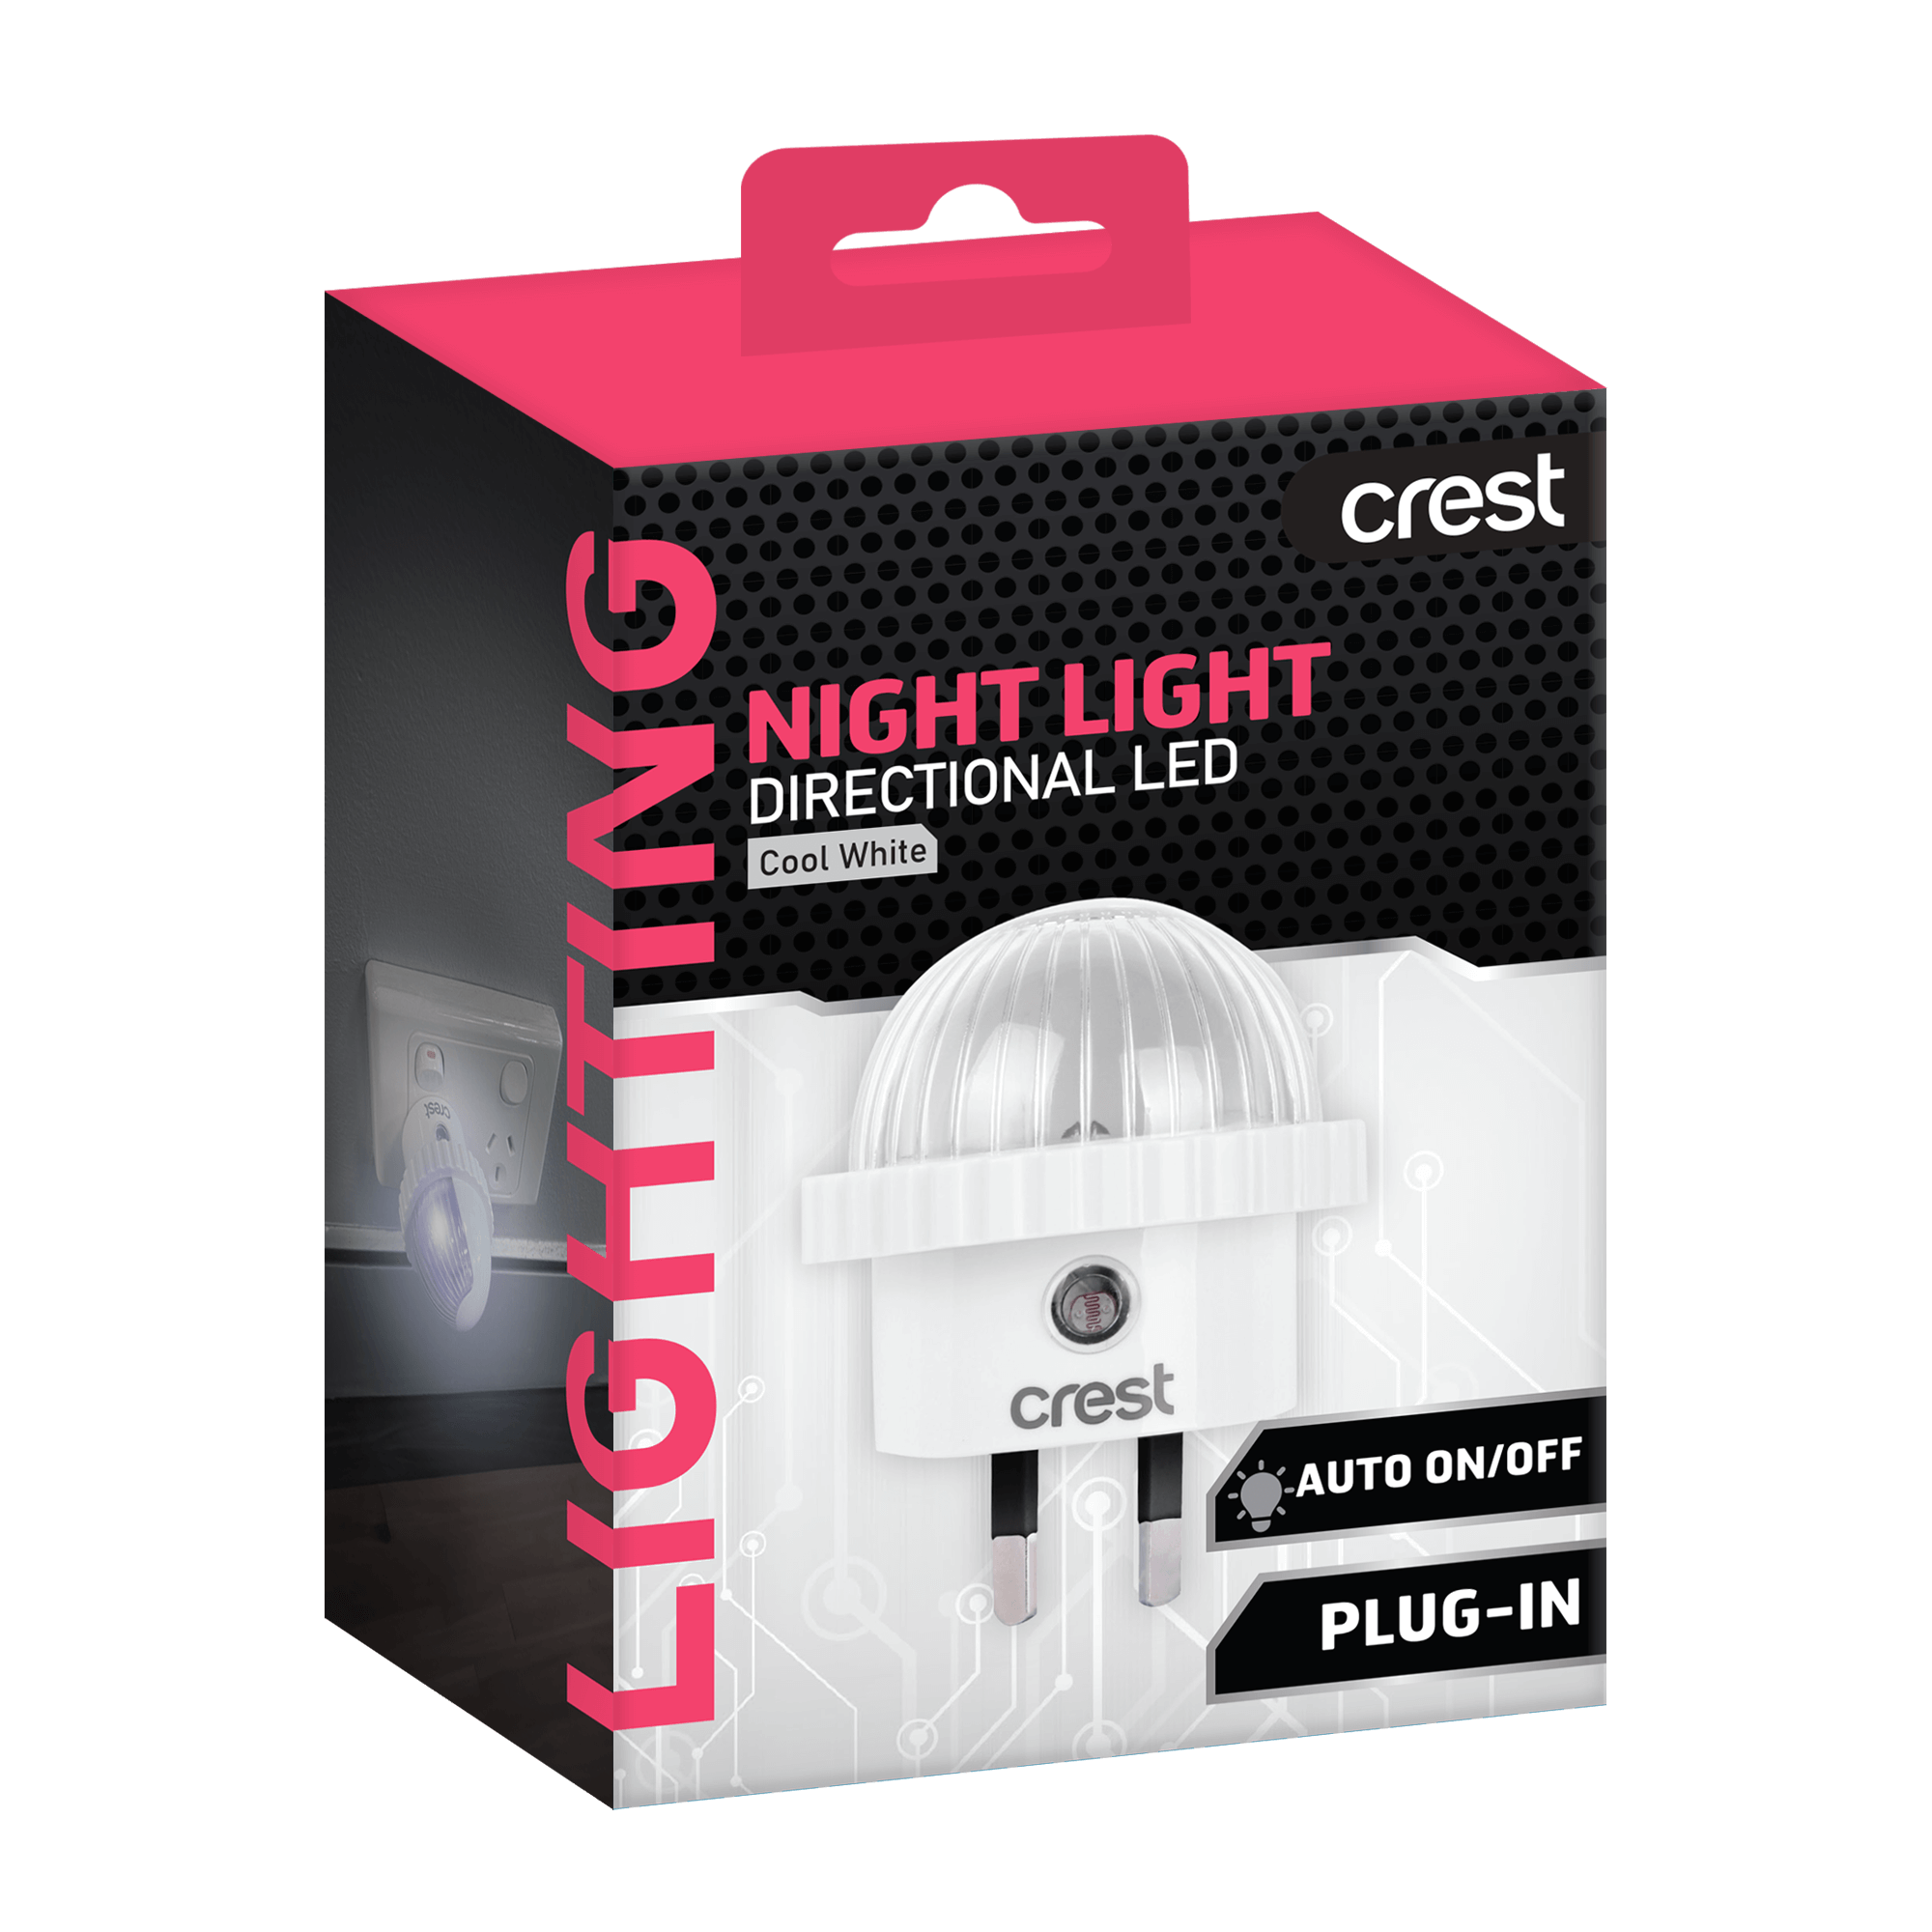 Directional LED Night Light